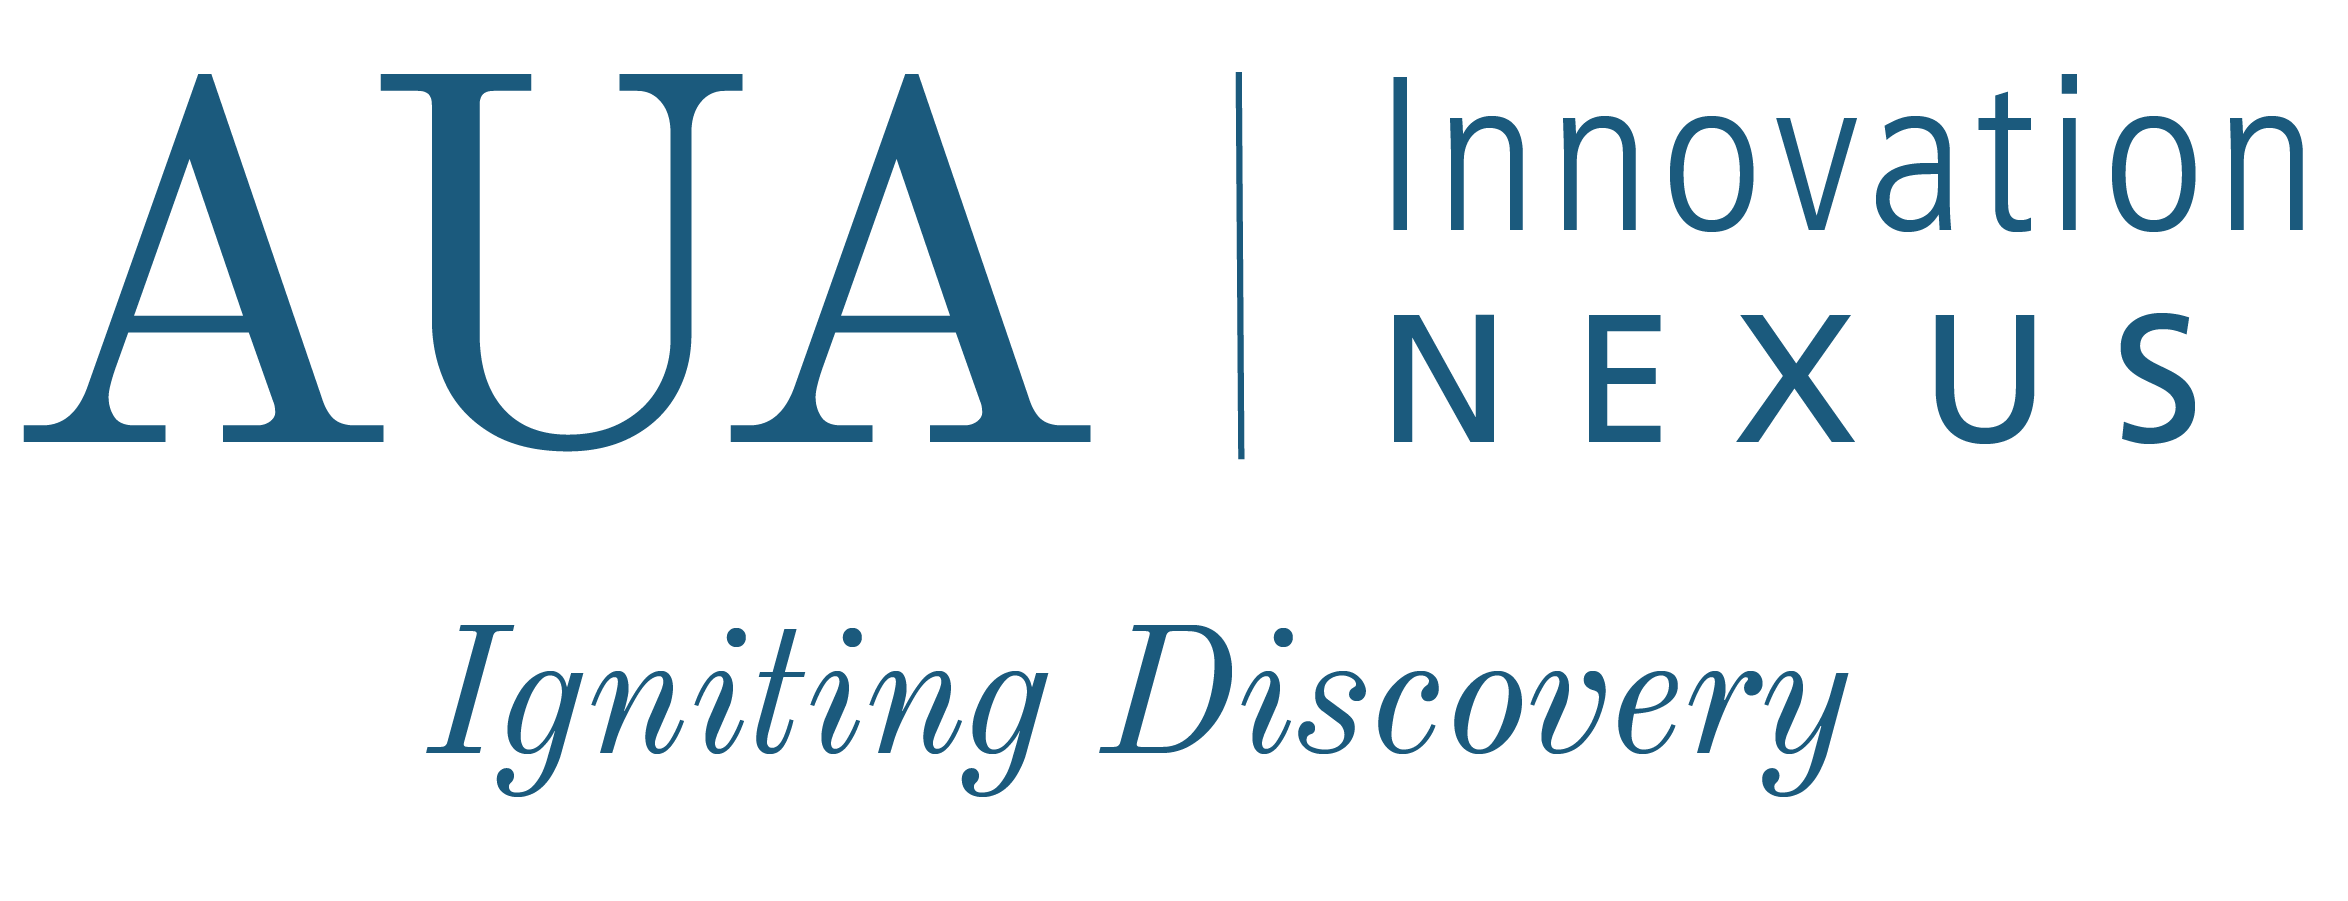 AUA Innovation Nexus American Urological Association